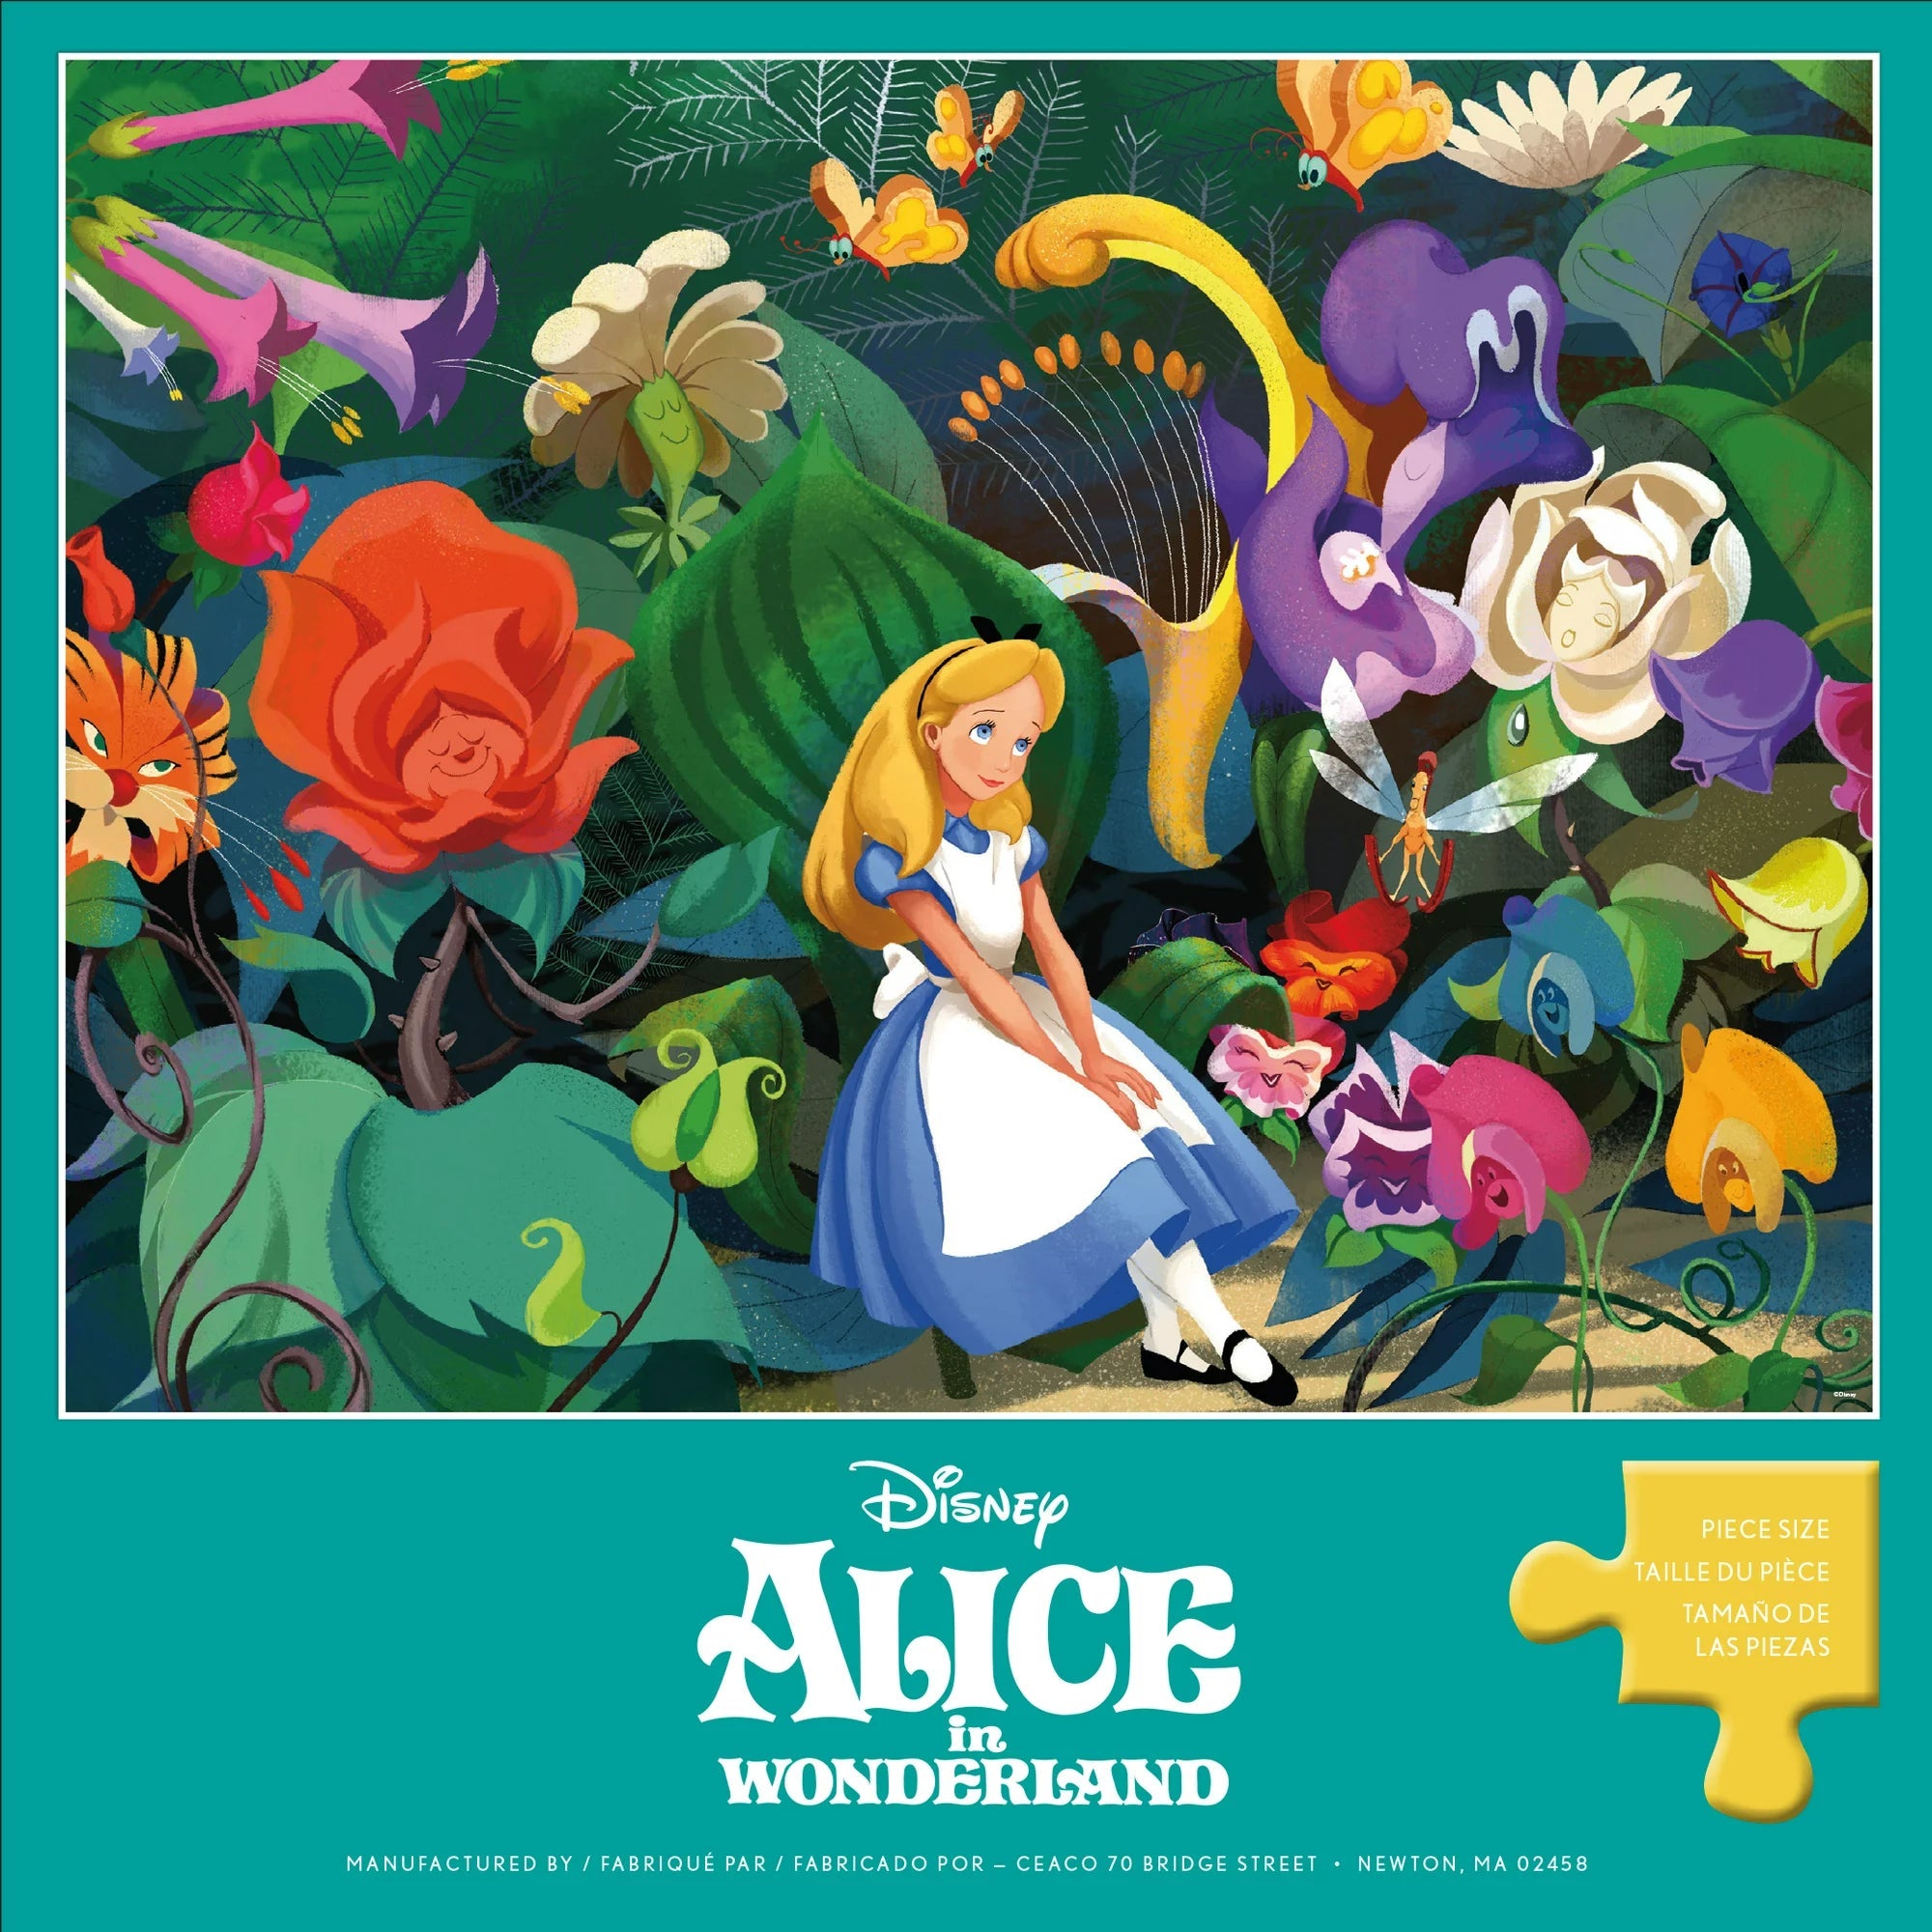 Prime 3d Disney Mickey Mouse Puzzle 300 Pieces Multicolor